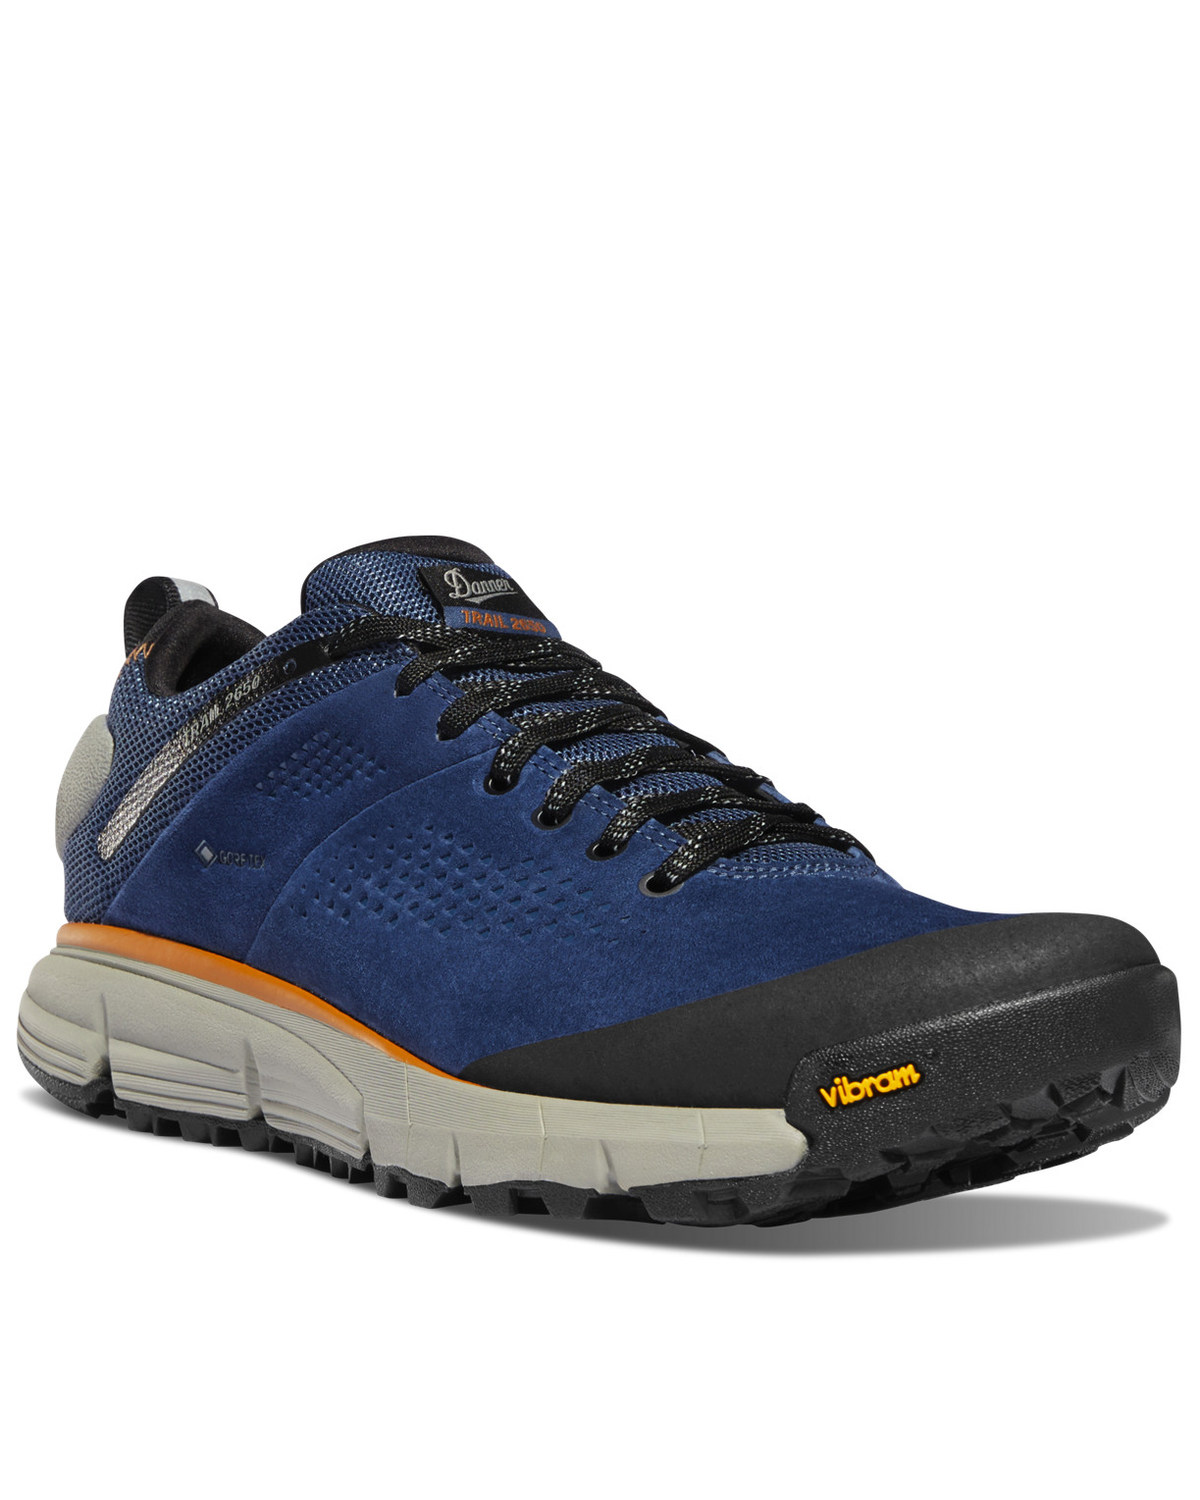 Danner Men's Trail 2650 Denim GTX Hiking Boots - Soft Toe